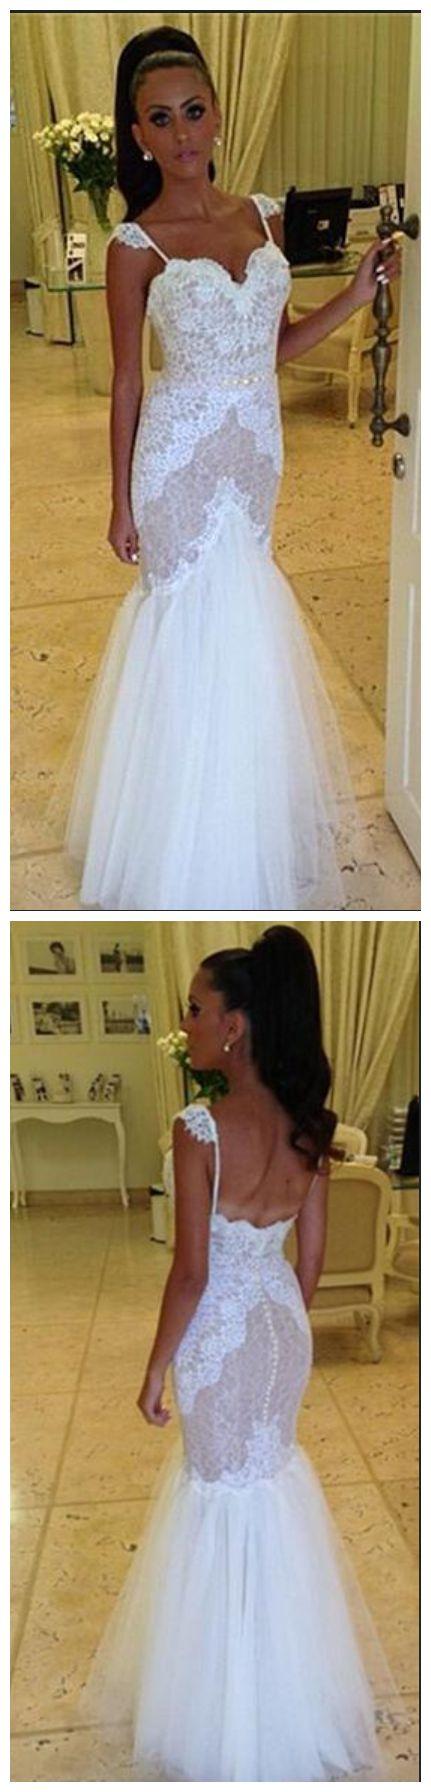 زفاف - Wedding Dresses, Wedding Gown,Lace Wedding Gowns,Ball Gown Bridal Dress,Fitted Wedding Dress,Corset Brides Dress,Vintage Wedding Gowns From Mfprom